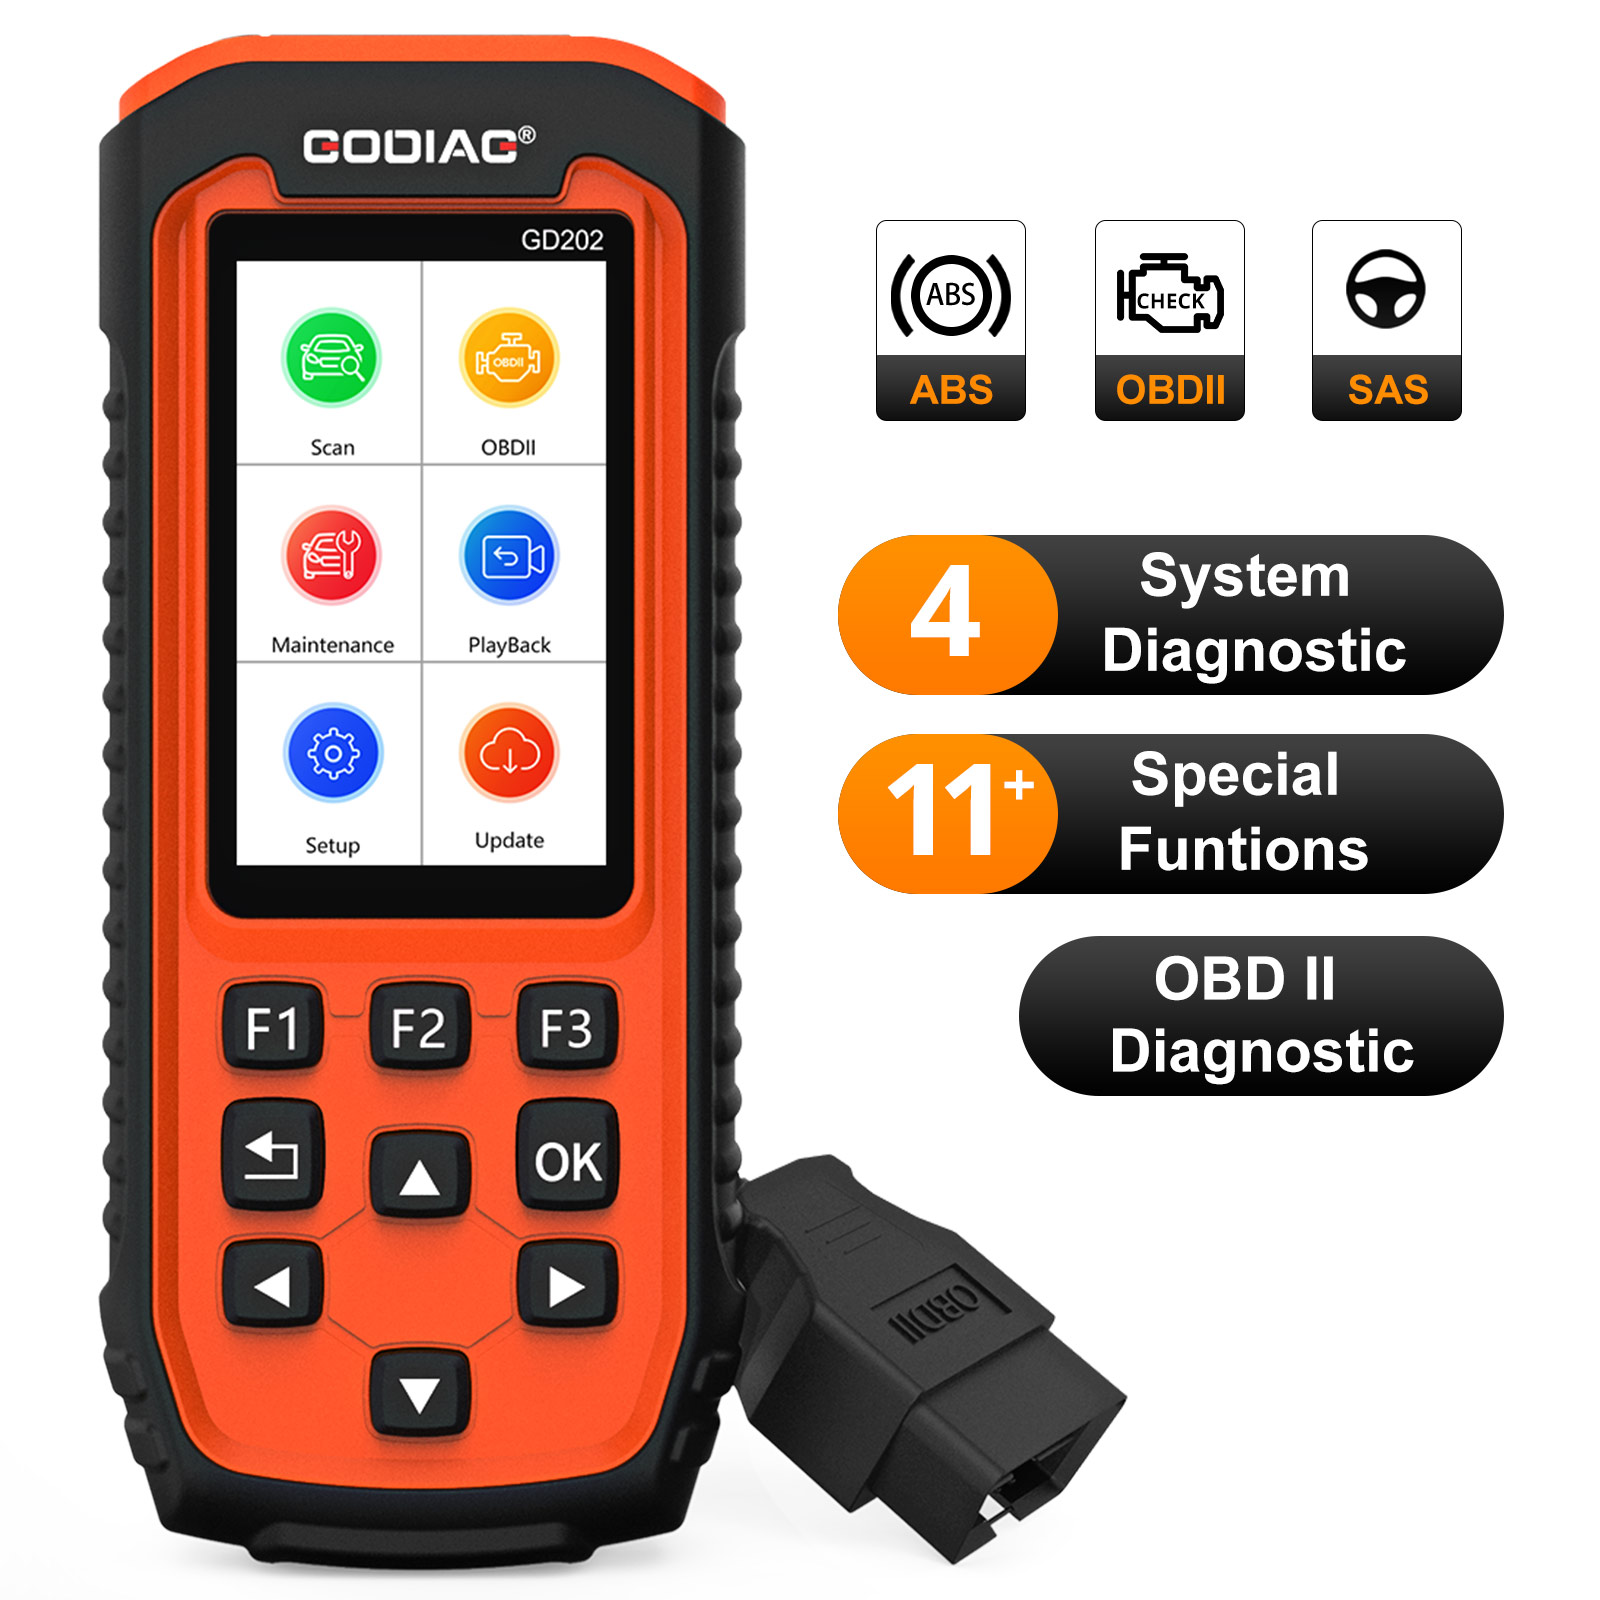 GODIAG GD202 OBD2 4 Systems Diagnostic OBDII Automotive Scanner